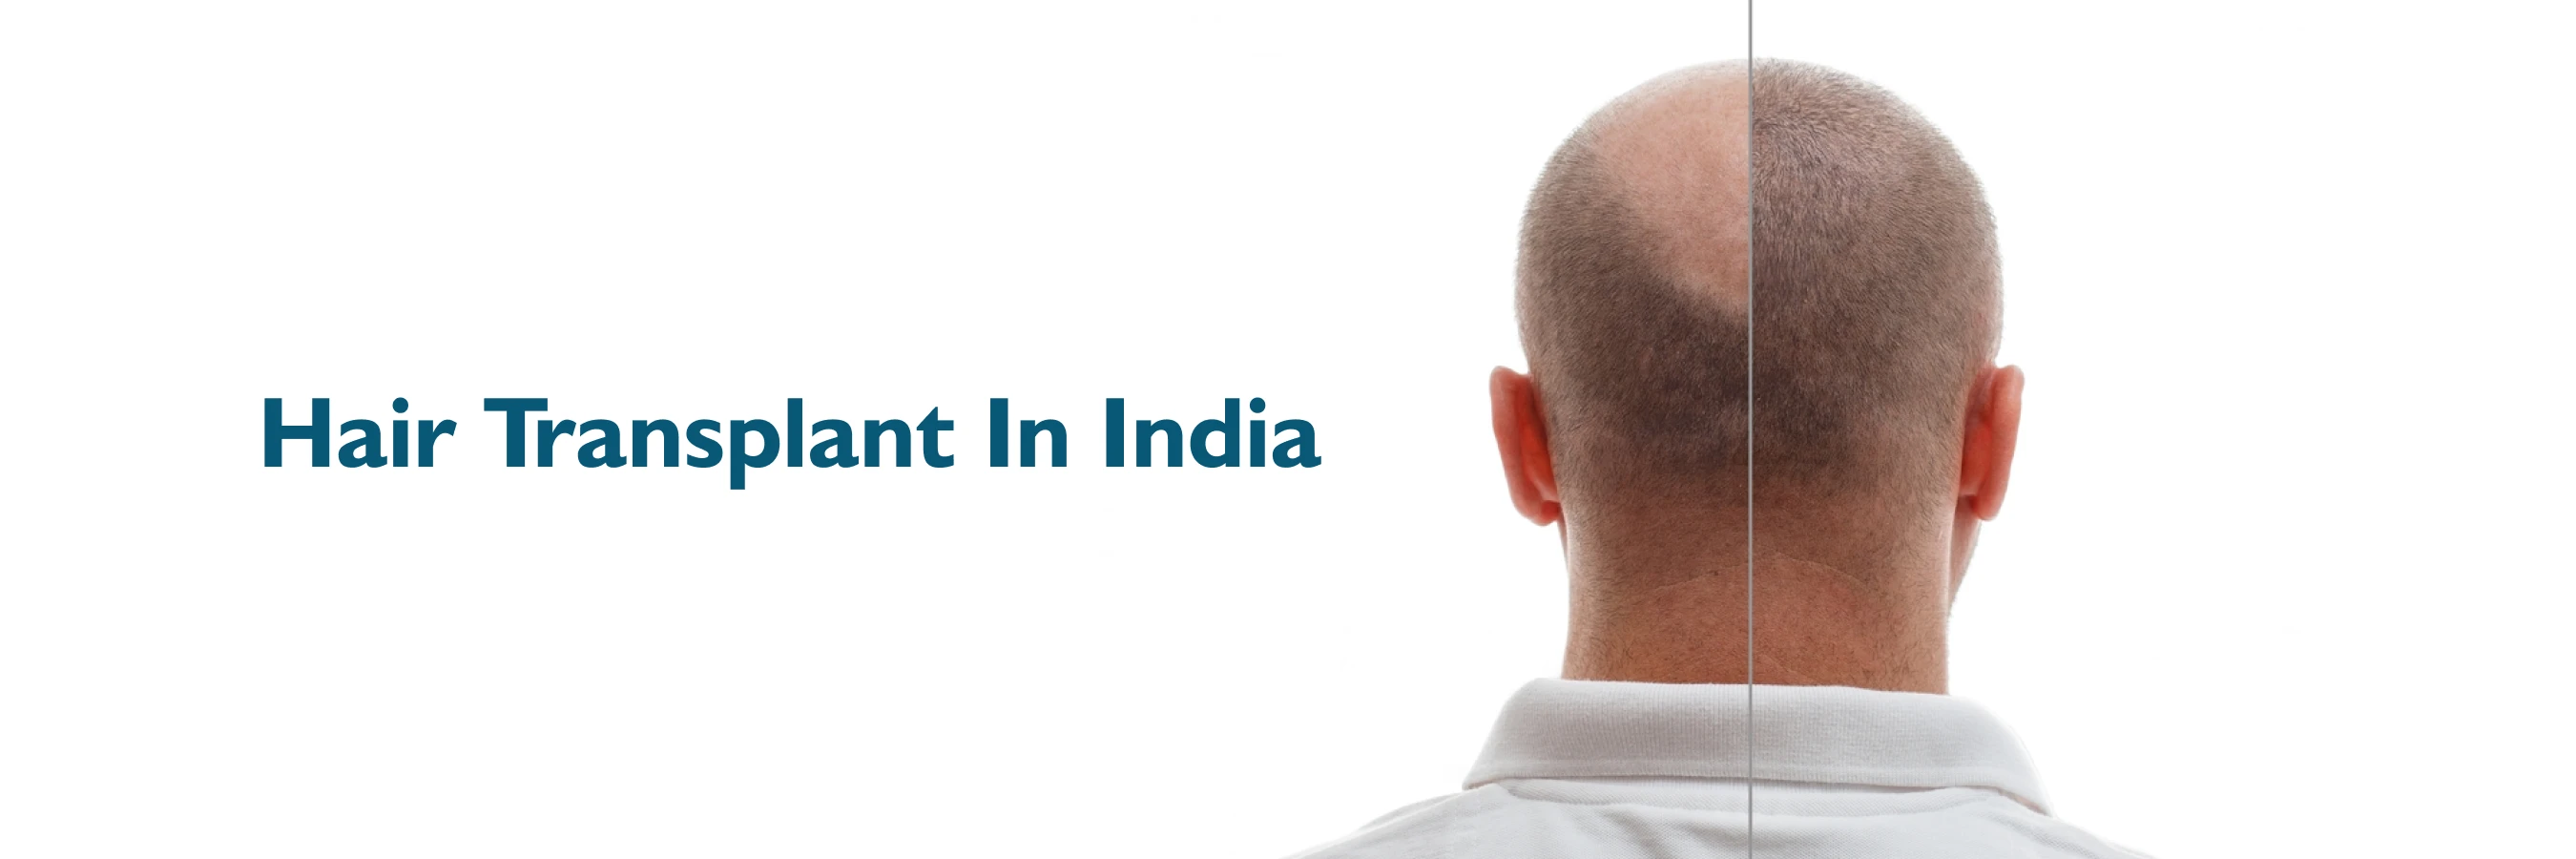 Hair Transplant Price in India